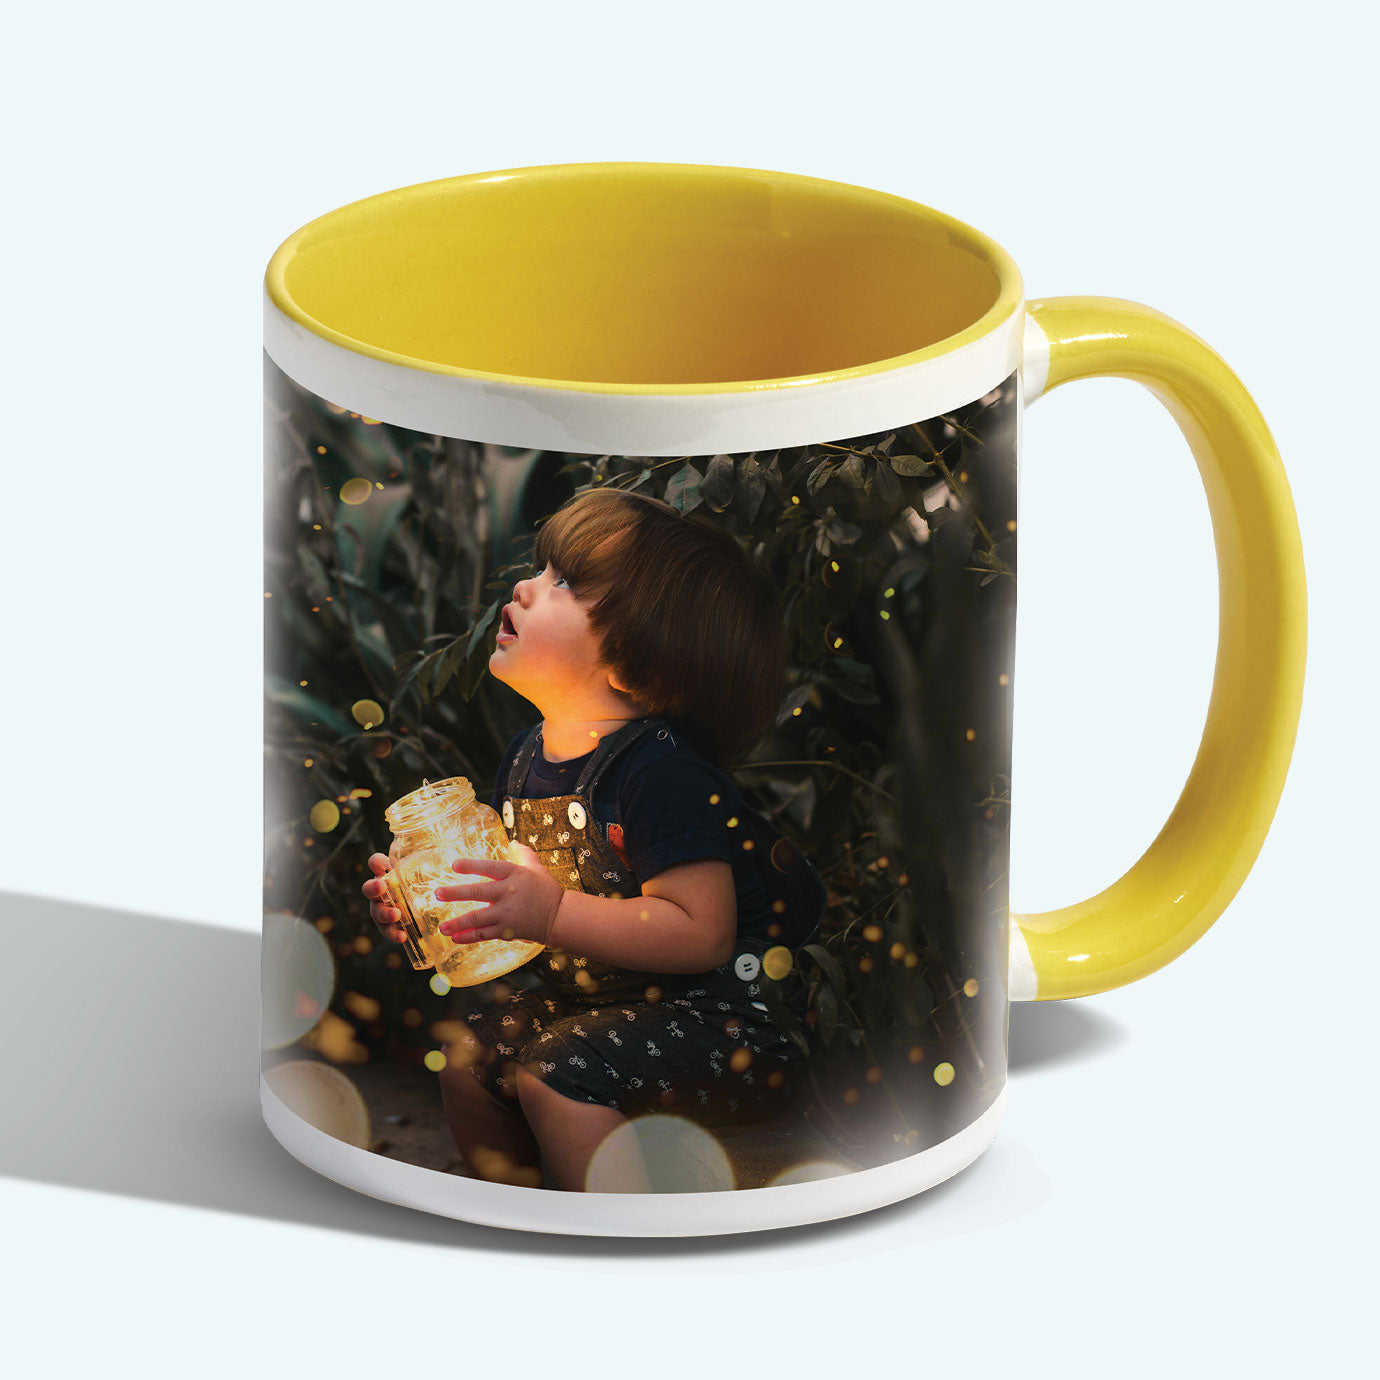 Buy Red Full Color Customized Photo Printed Coffee Mug